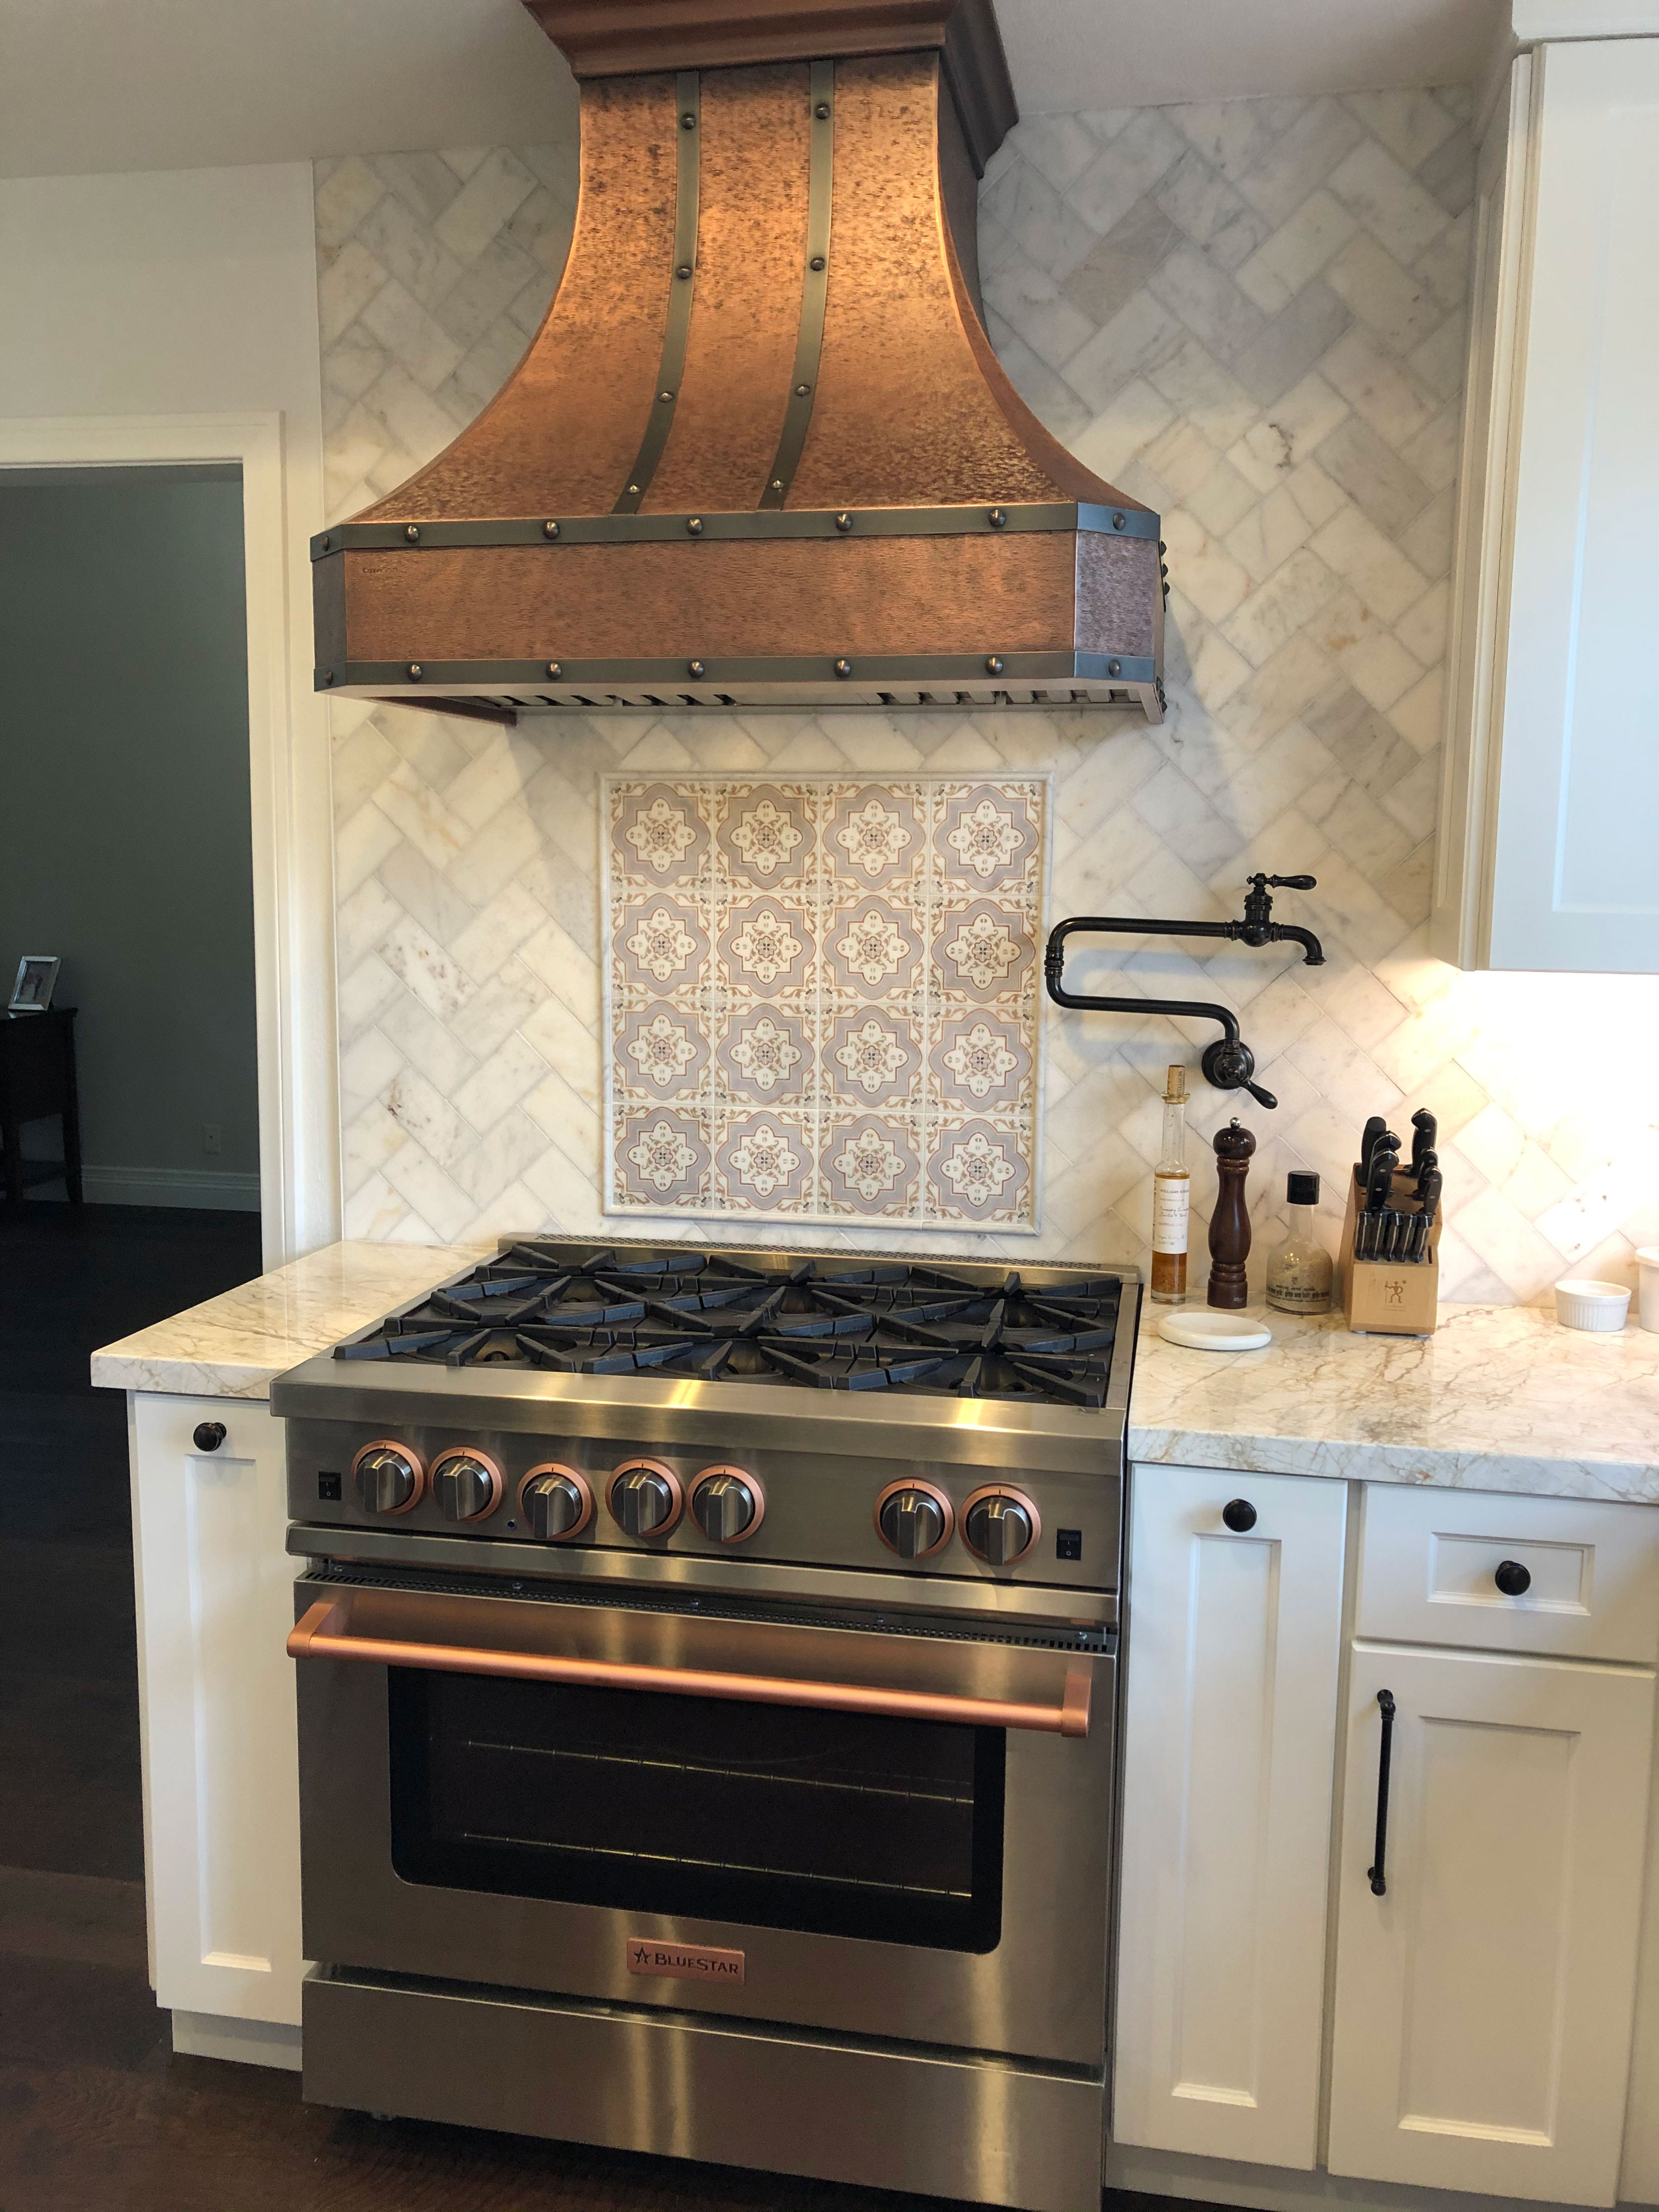 French kitchen design features brown kitchen cabinets with marble kitchen countertops, brick backsplash stylish range hood